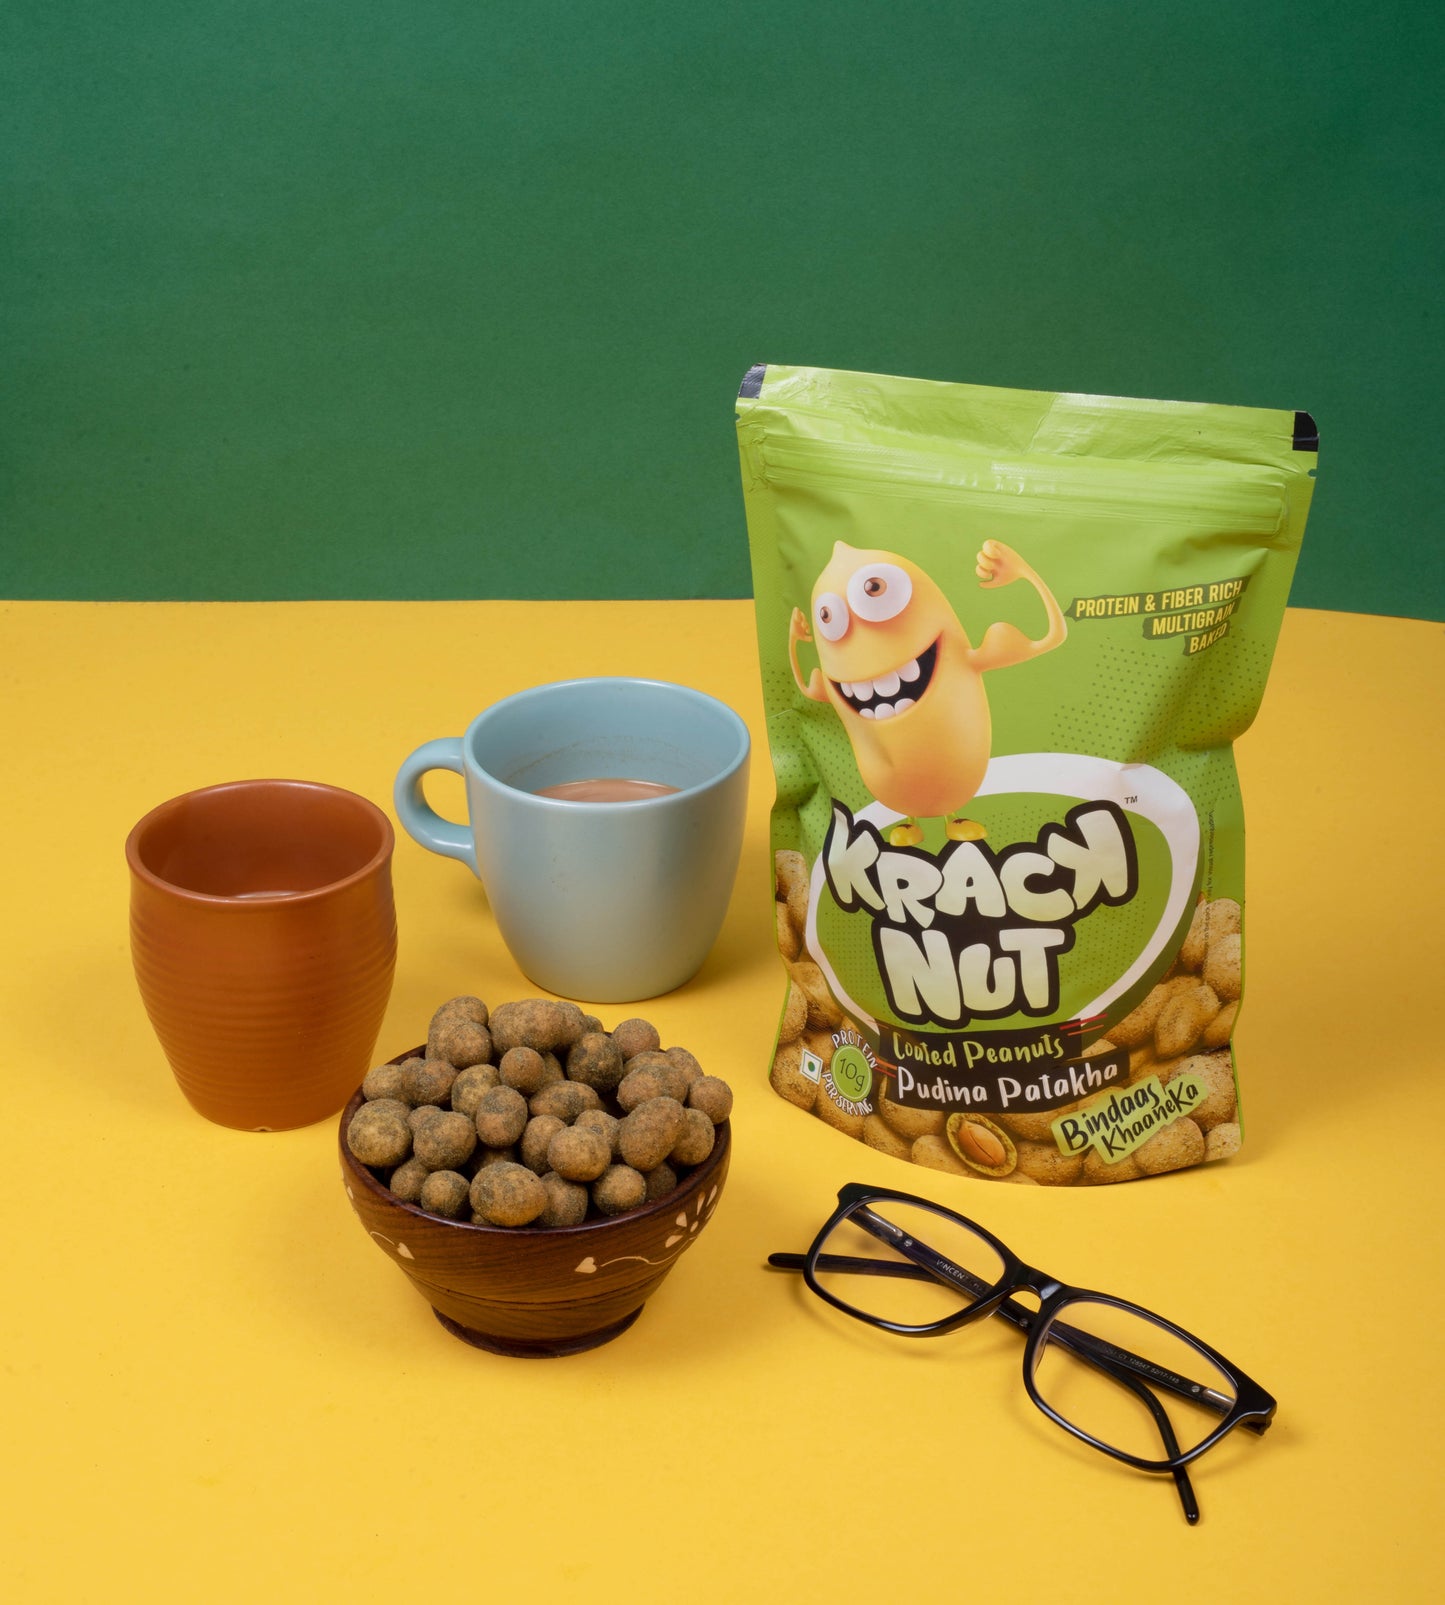 Kracknut Baked Coated Peanuts - Assorted Pack of 12 (25g x 12N) - Thai Firangi | Tandoori Tofaan | Pudhina Pathaka Flavored crunchy coated peanuts | Healthy baked Indian Snack | Vegan |